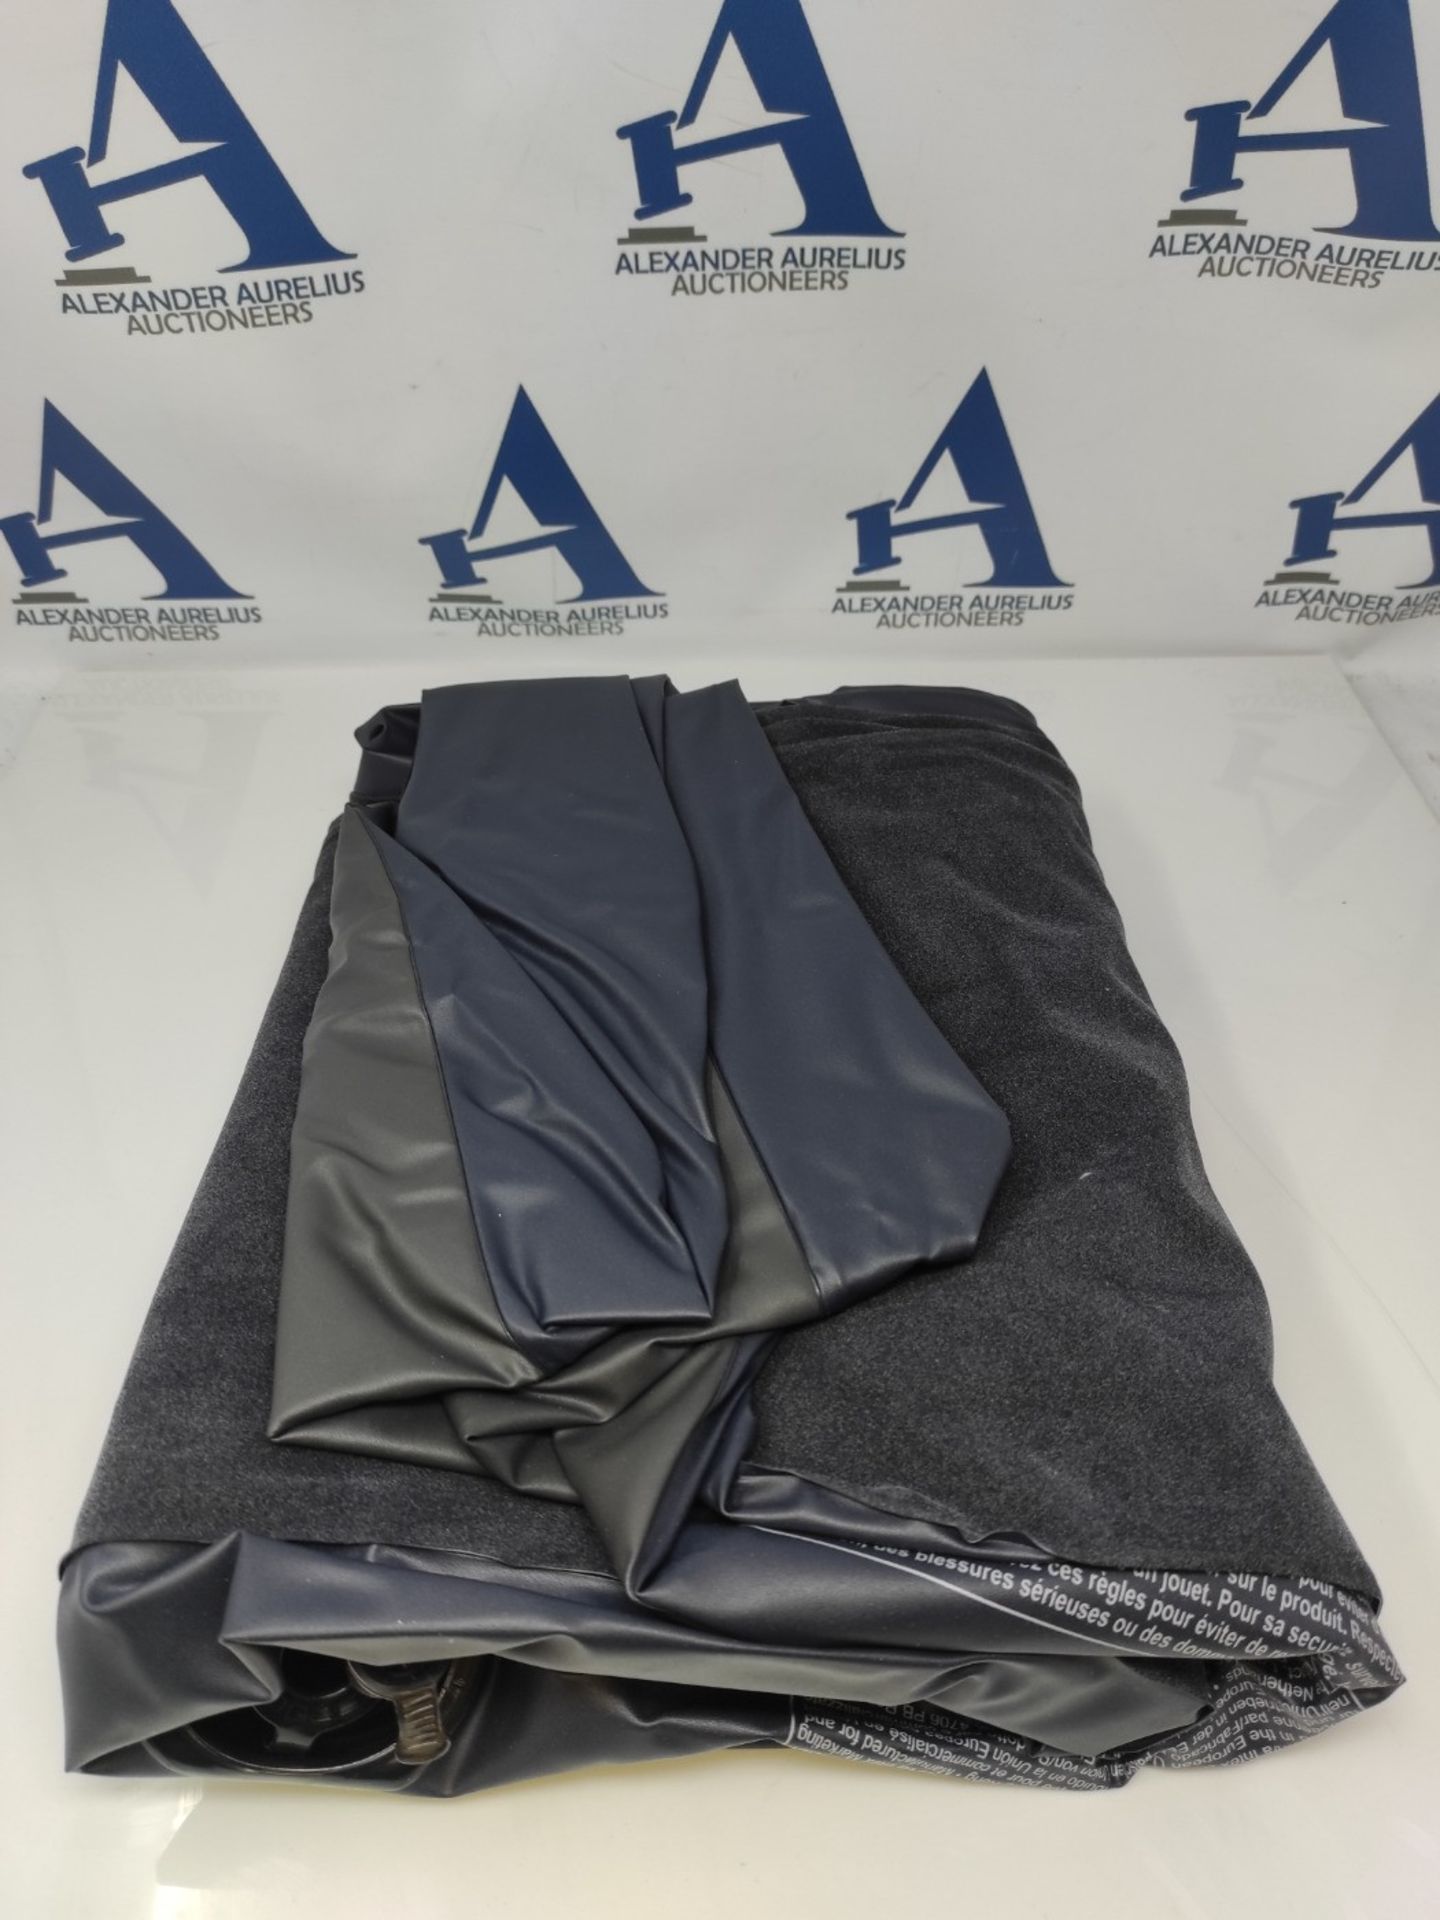 Intex 64141 Dura Beam Pillow Rest single mattress with Fiber Tech technology, without - Image 3 of 3